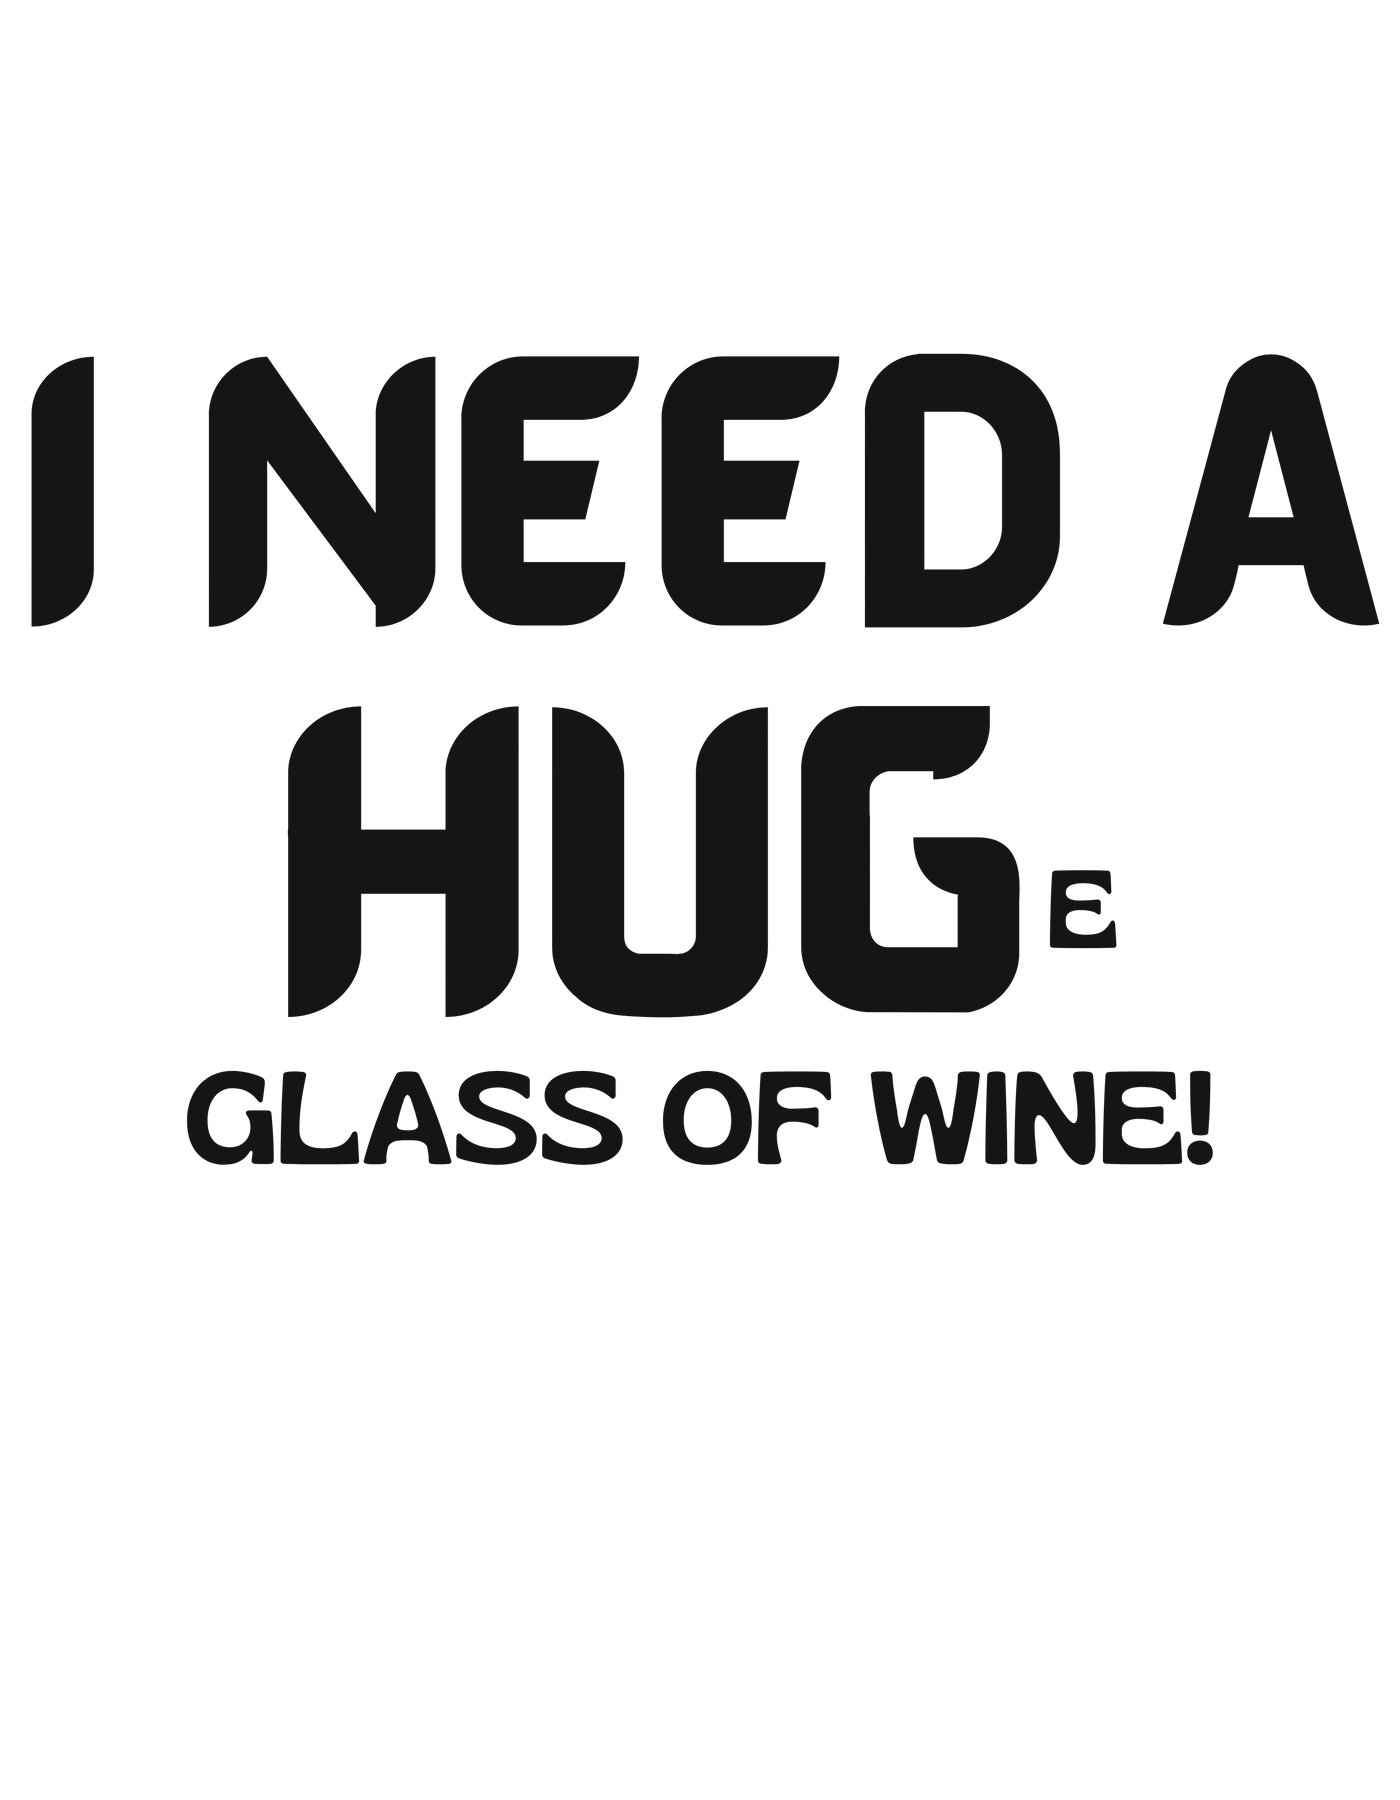 I Need A HUGe Glass of Wine Crewneck